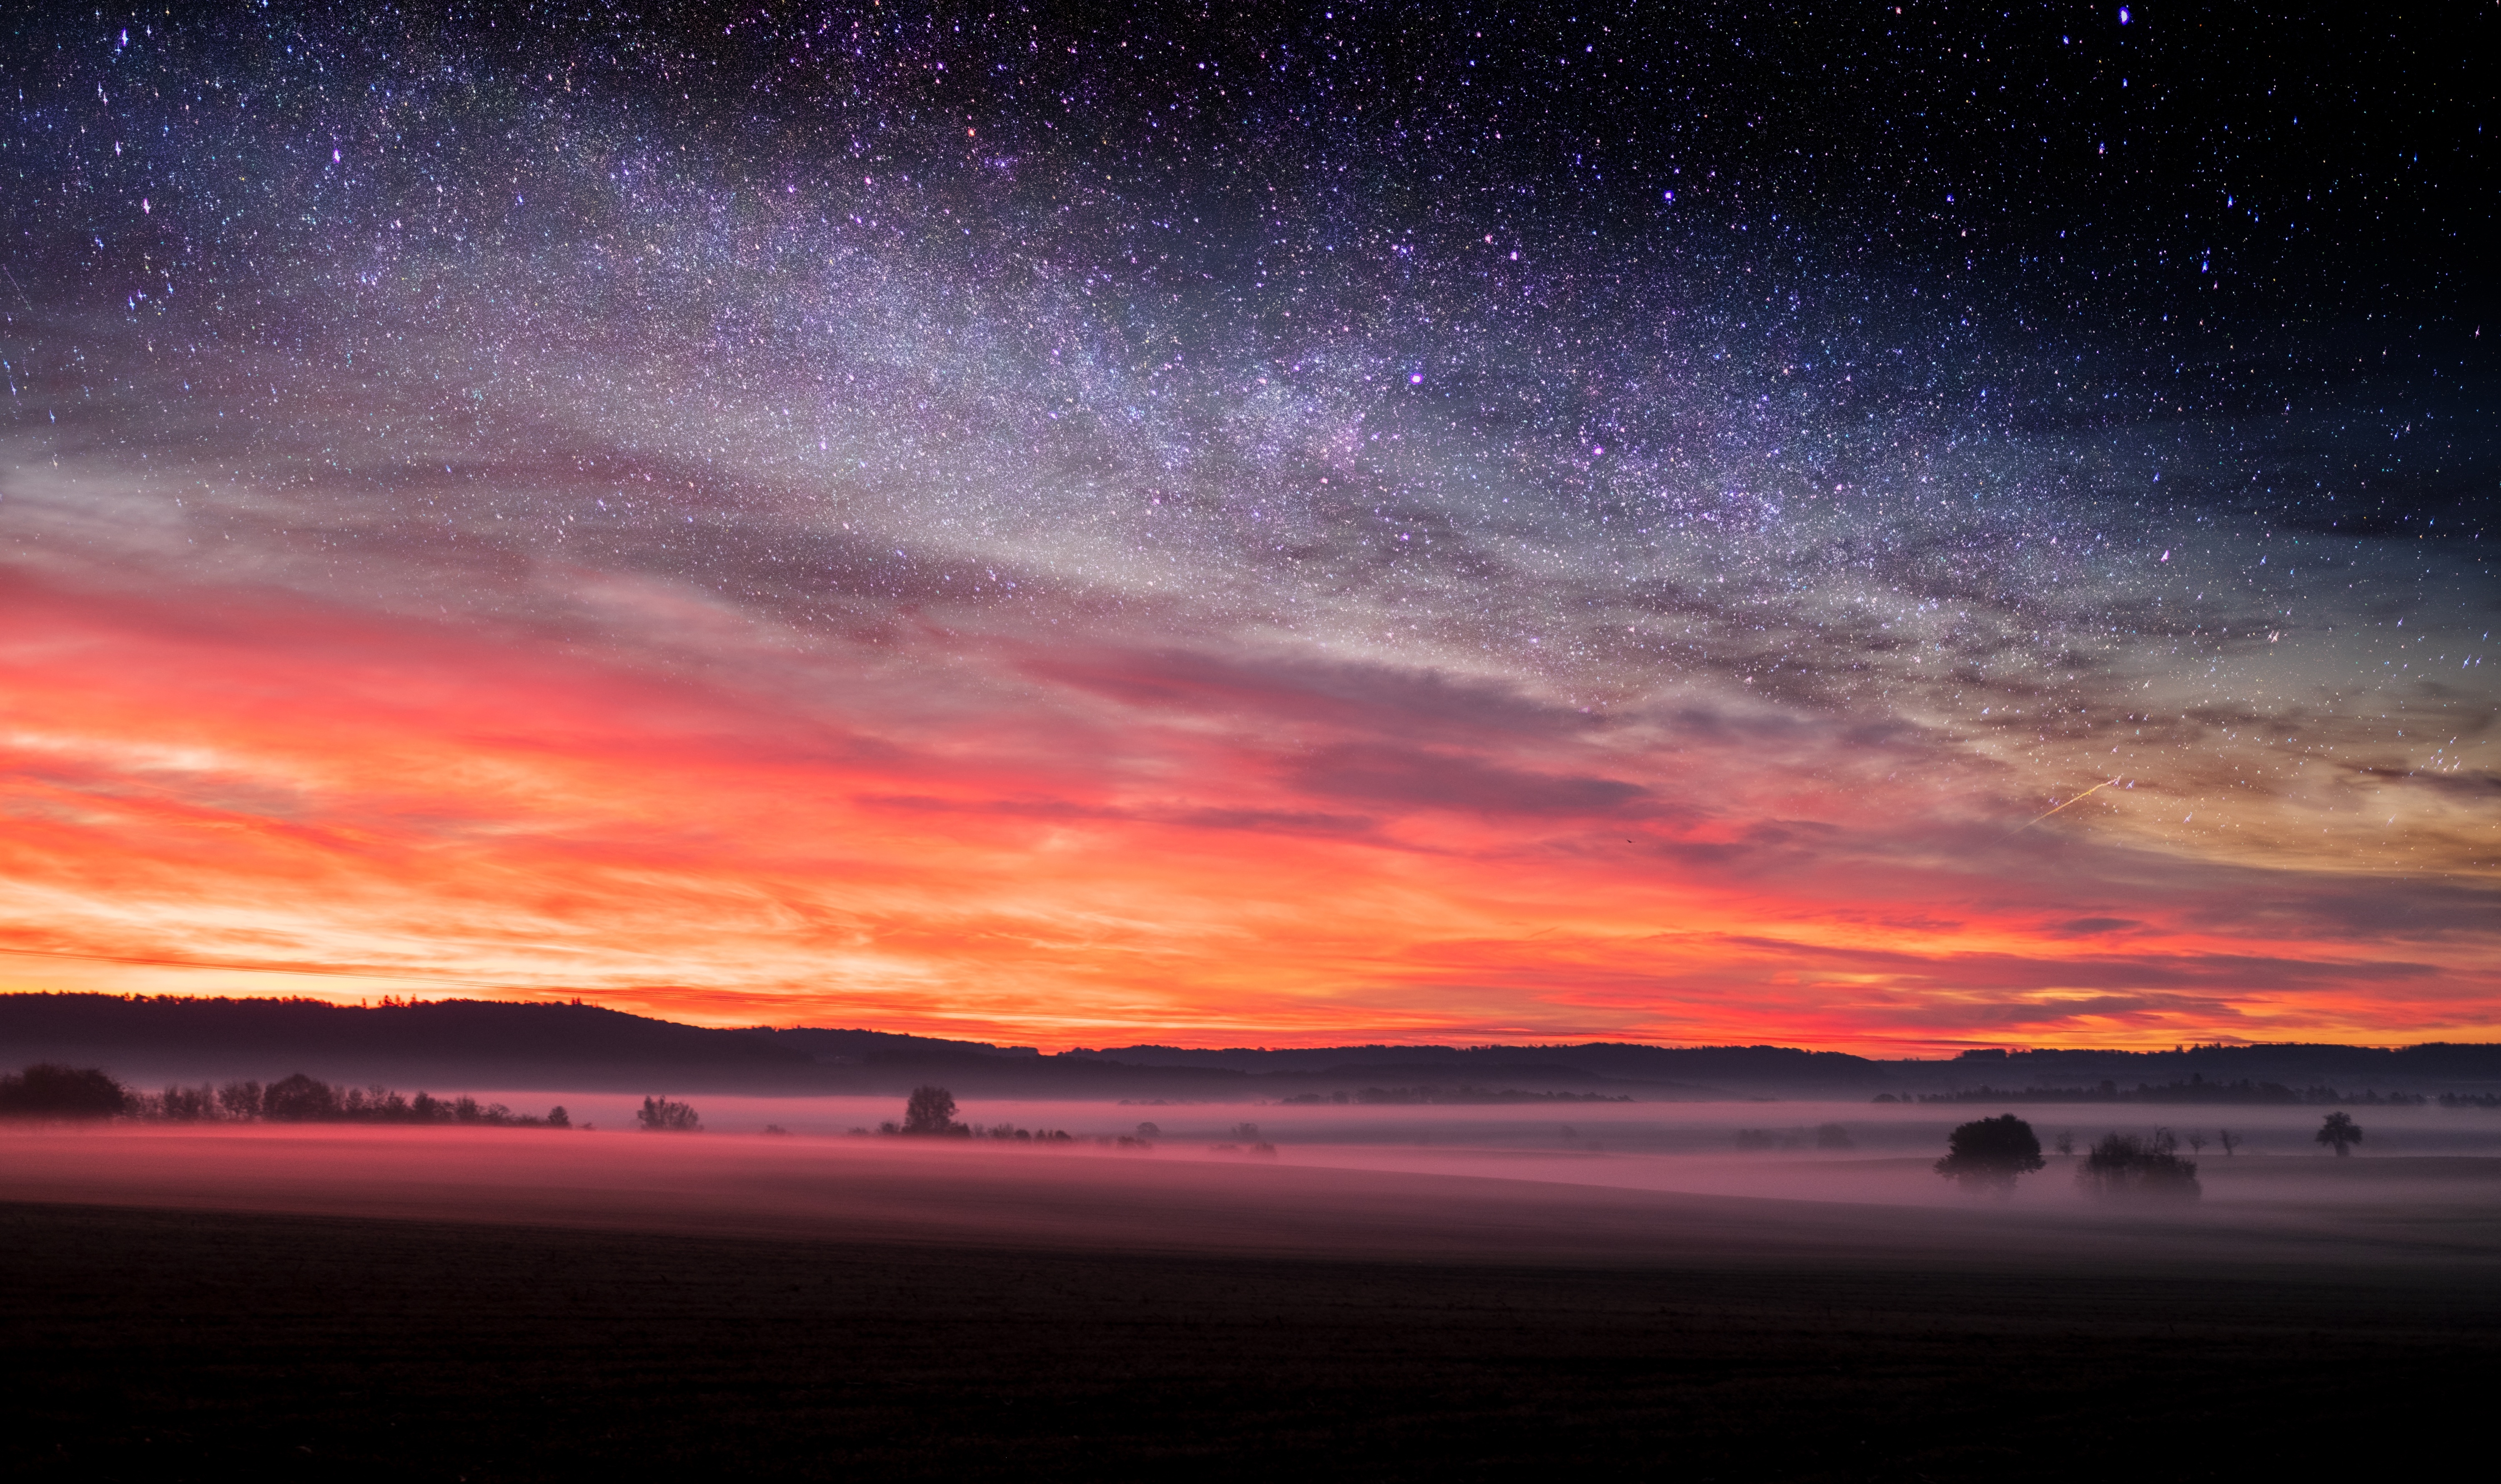 Бесплатное фото Закат со звездным небом